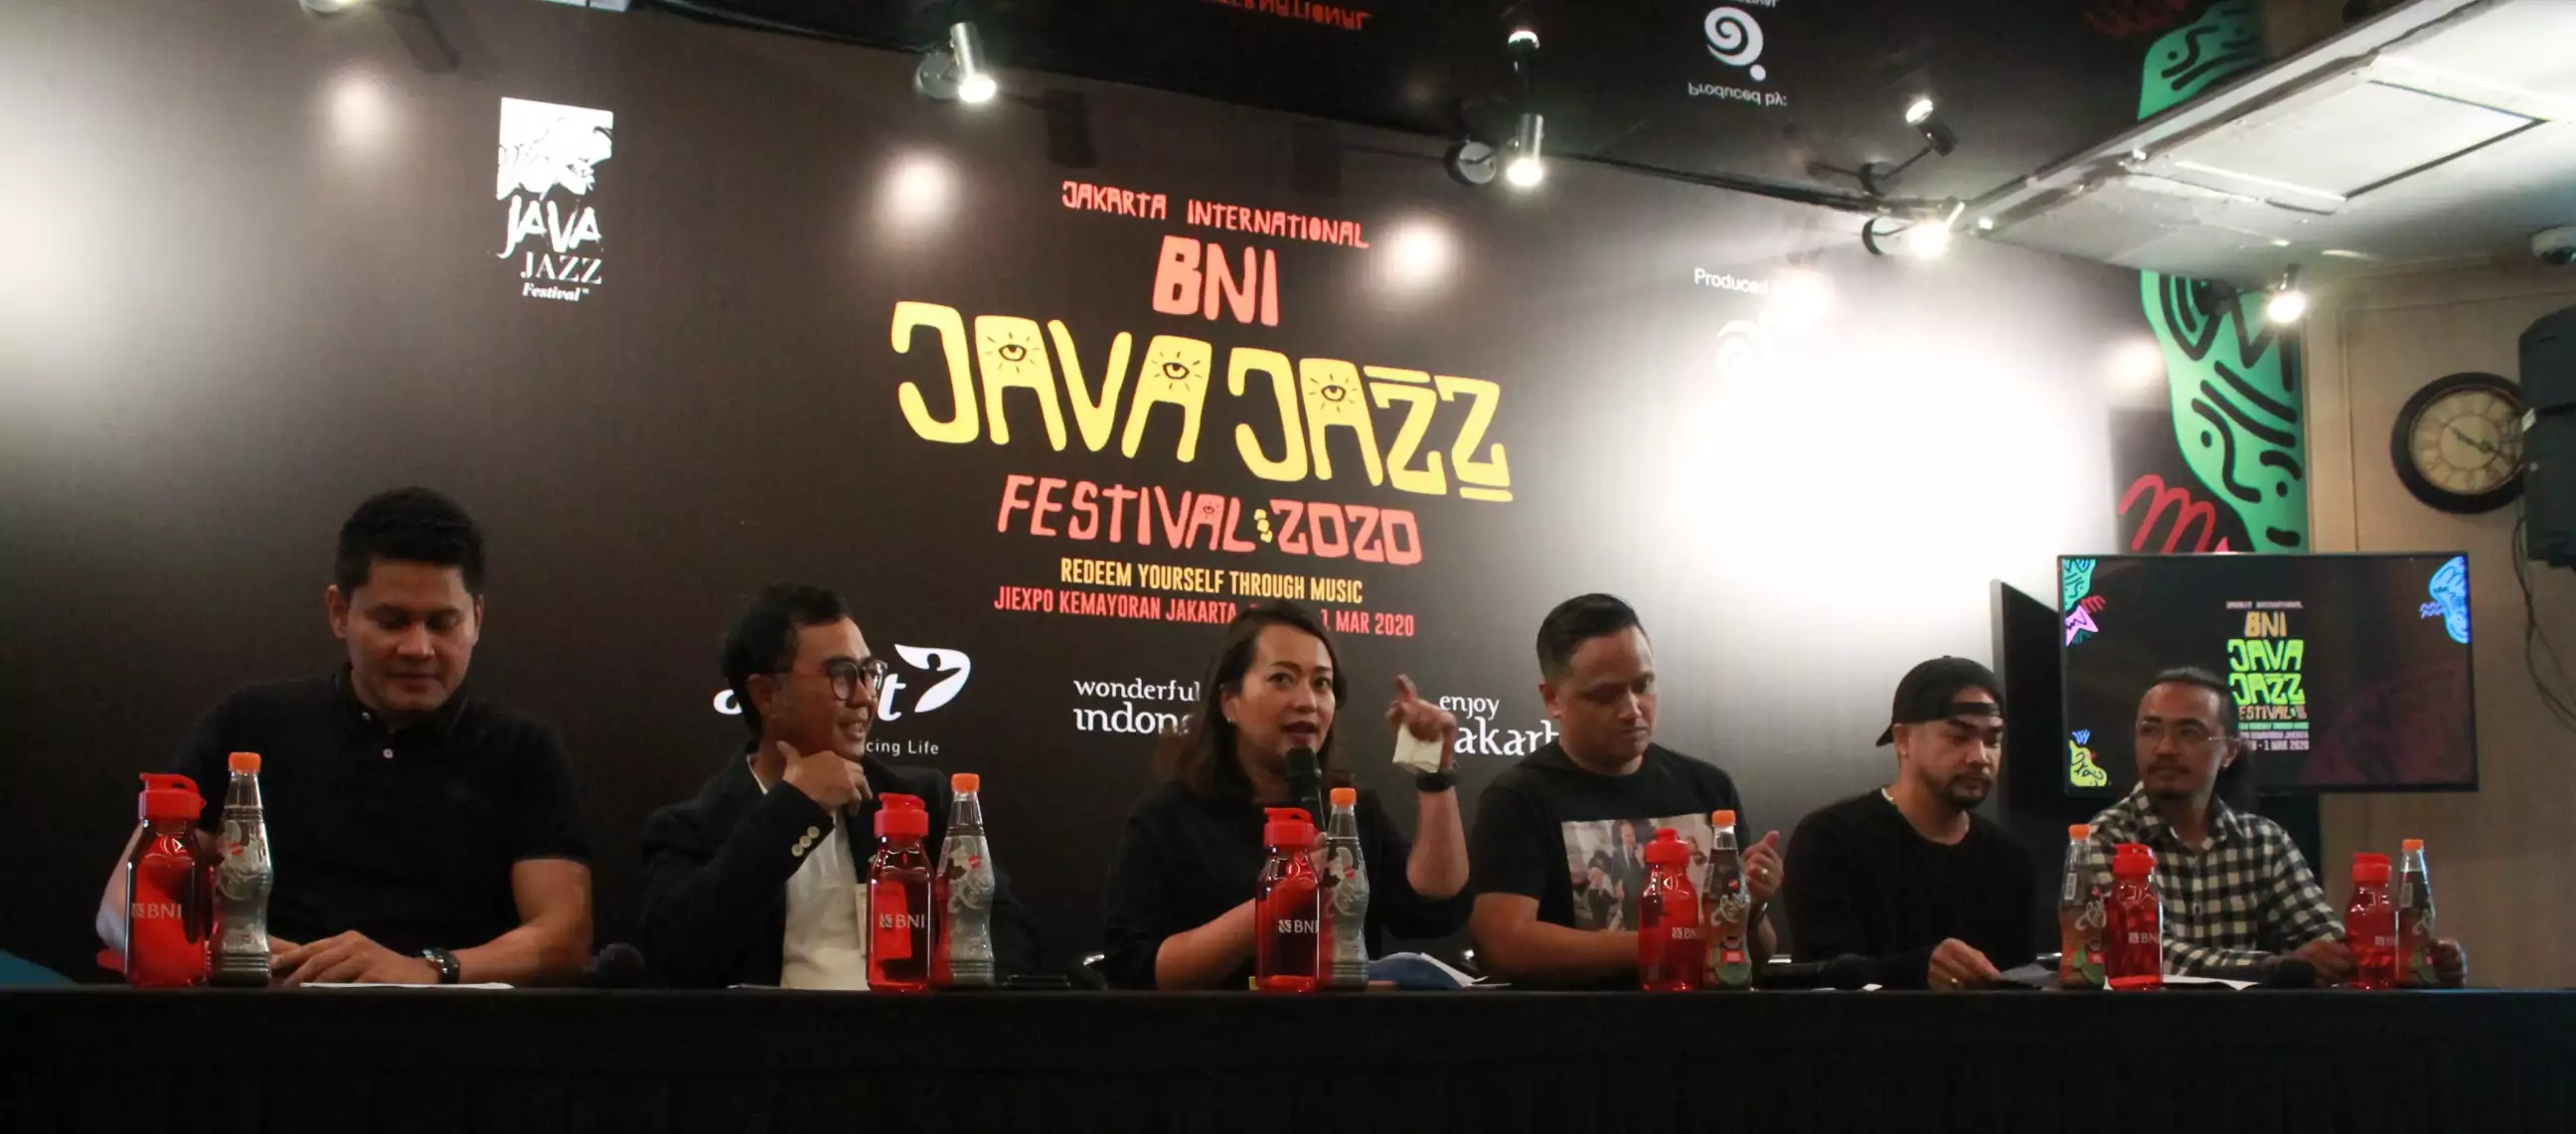 7 Fakta Java Jazz 2020, ada special show The Jacksons dan Omar Apollo